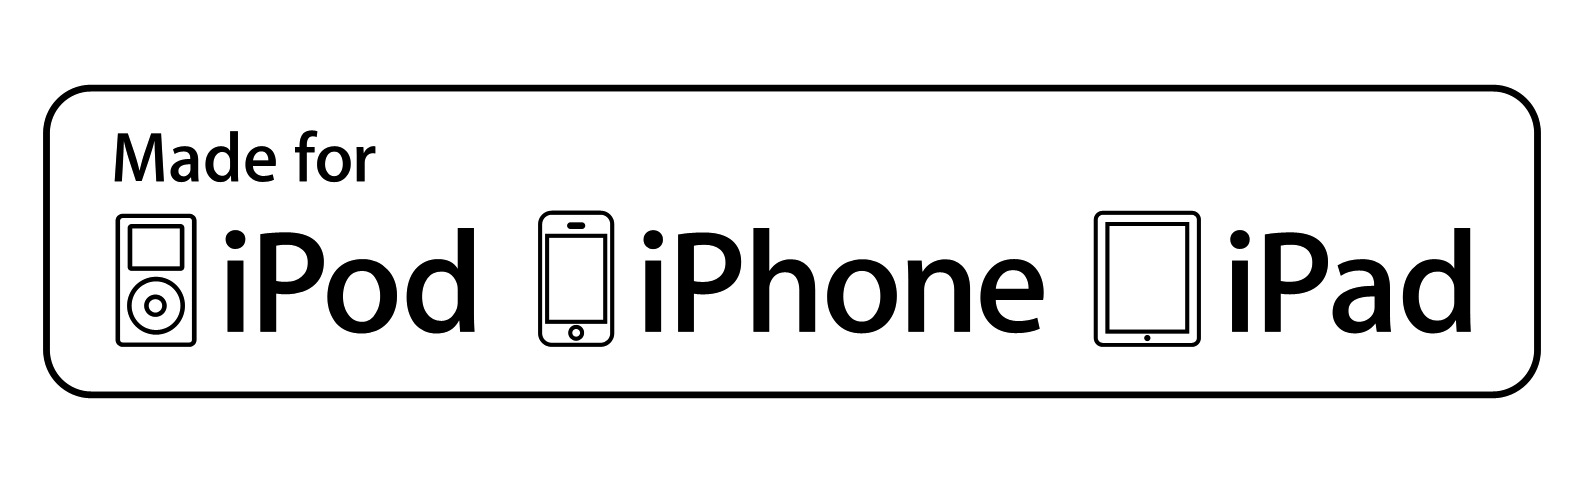 logo_iphone_ipod_ipad.png